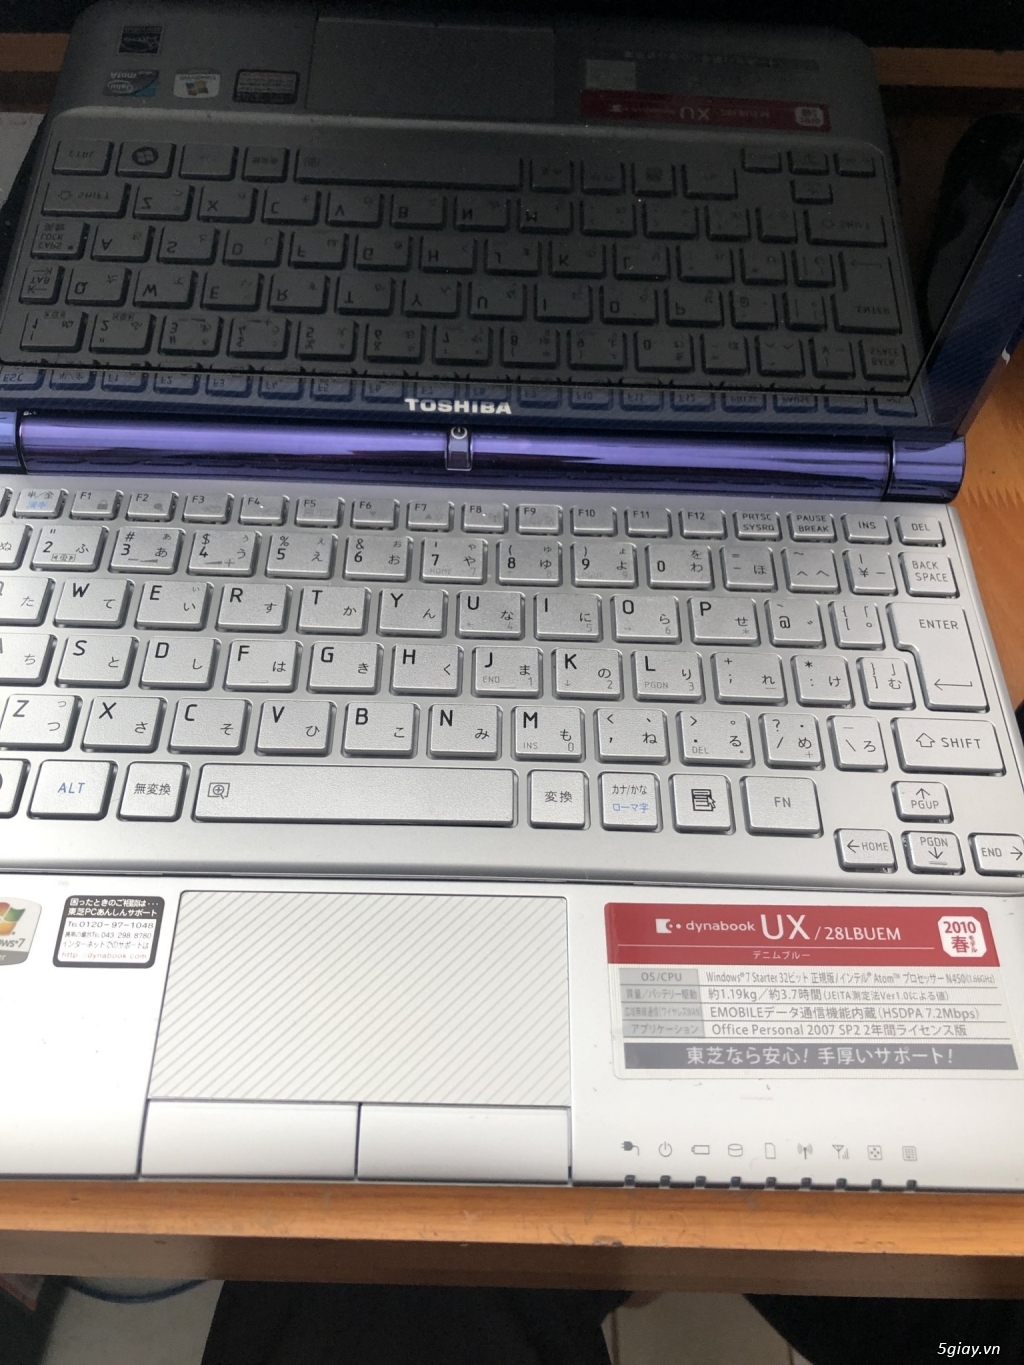 Laptop Mini Toshiba dynabook UX/28LBUEM